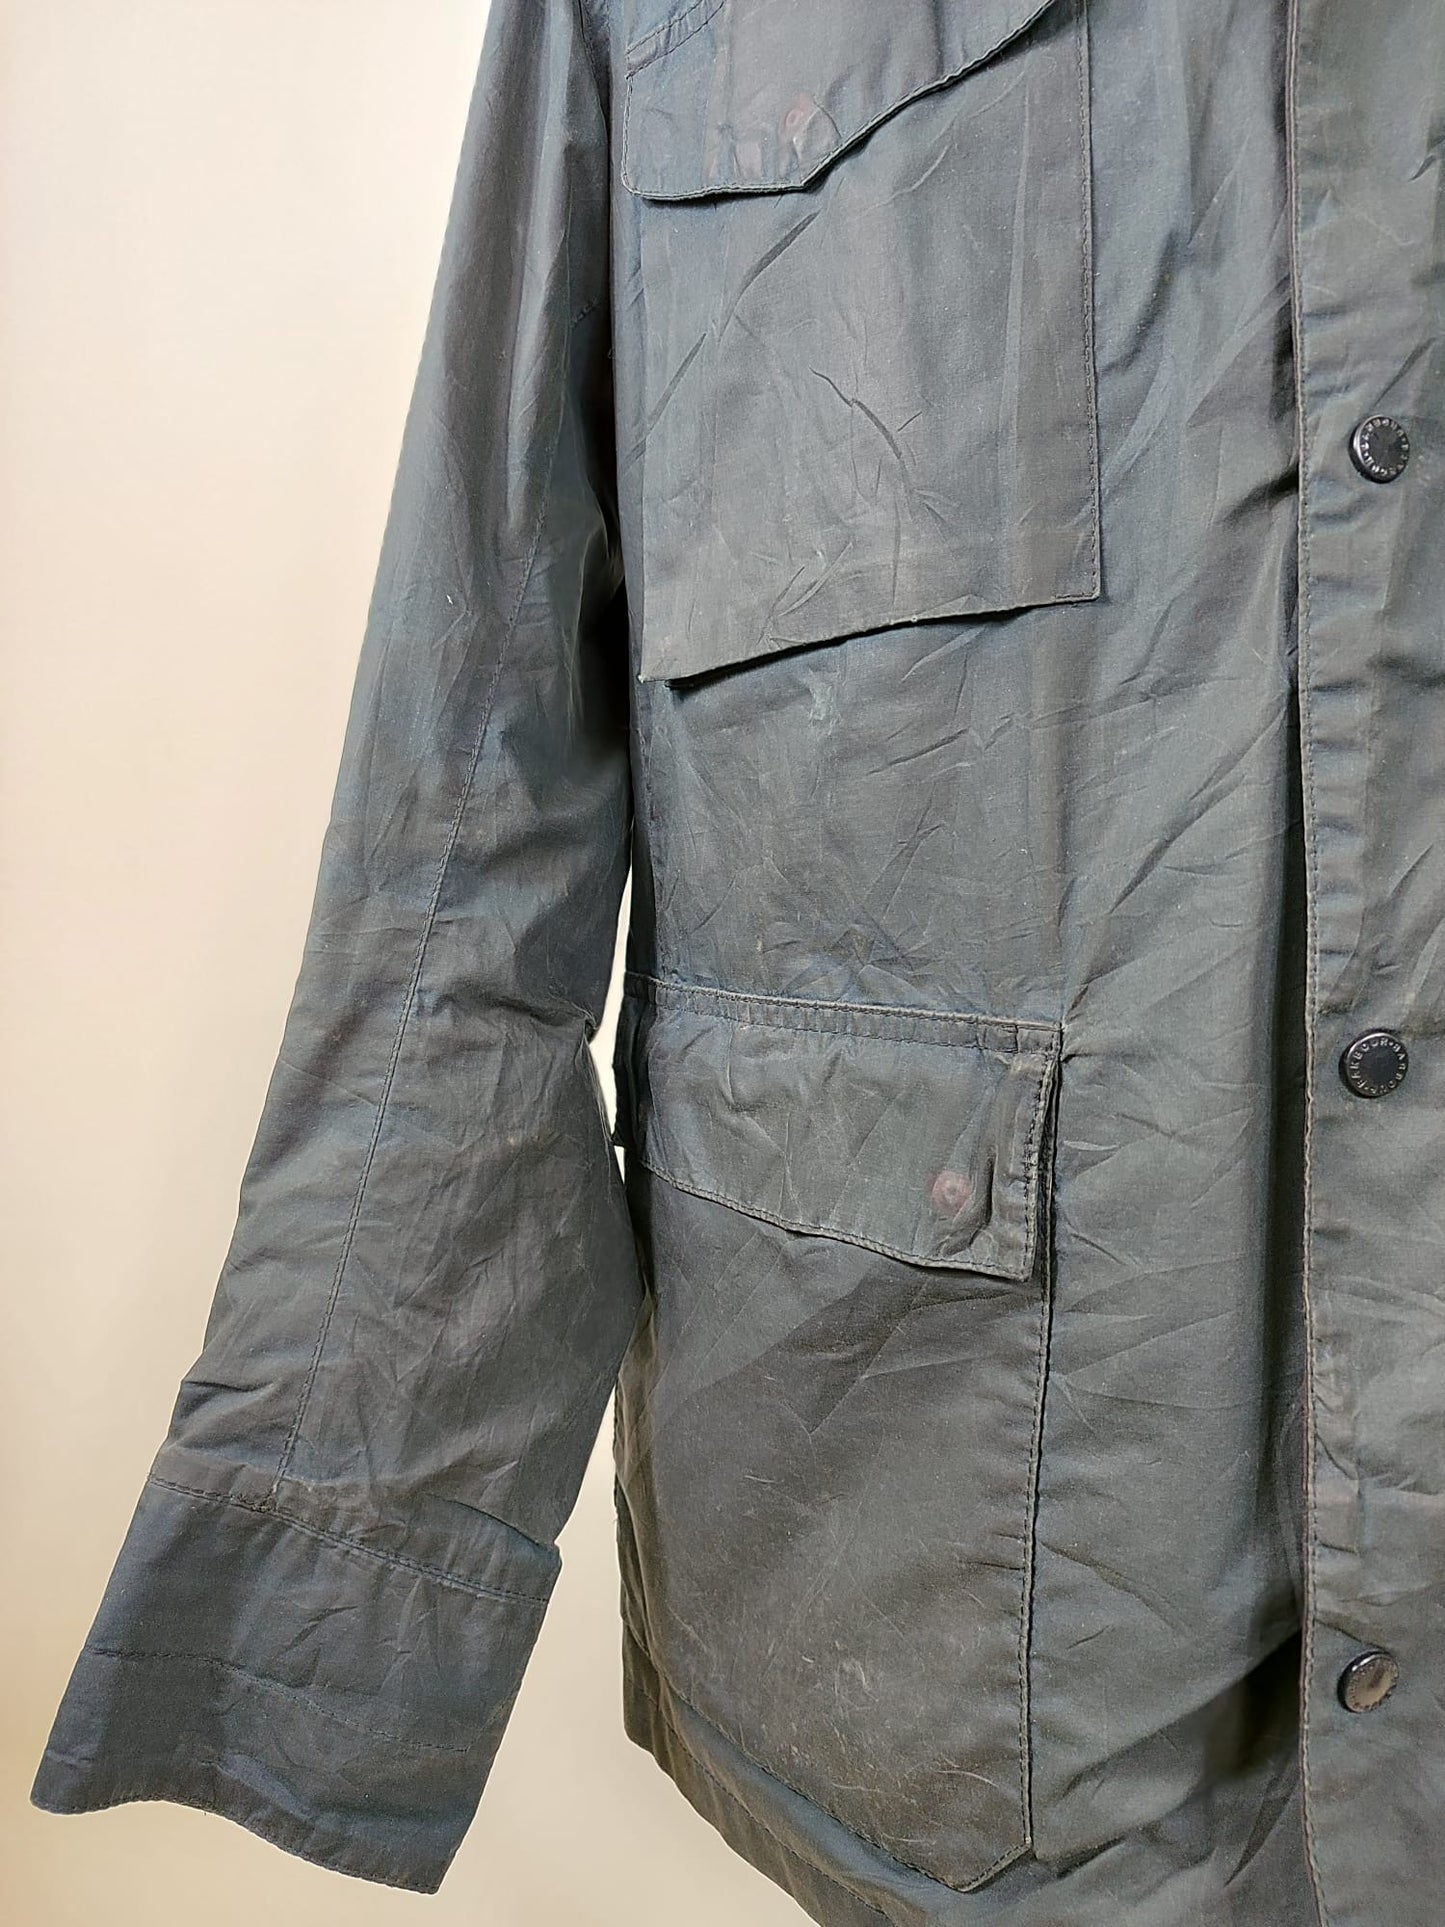 Giacca da uomo blu Tailored Sapper cerato taglia XL - Man Navy wax Sapper jacket size XL